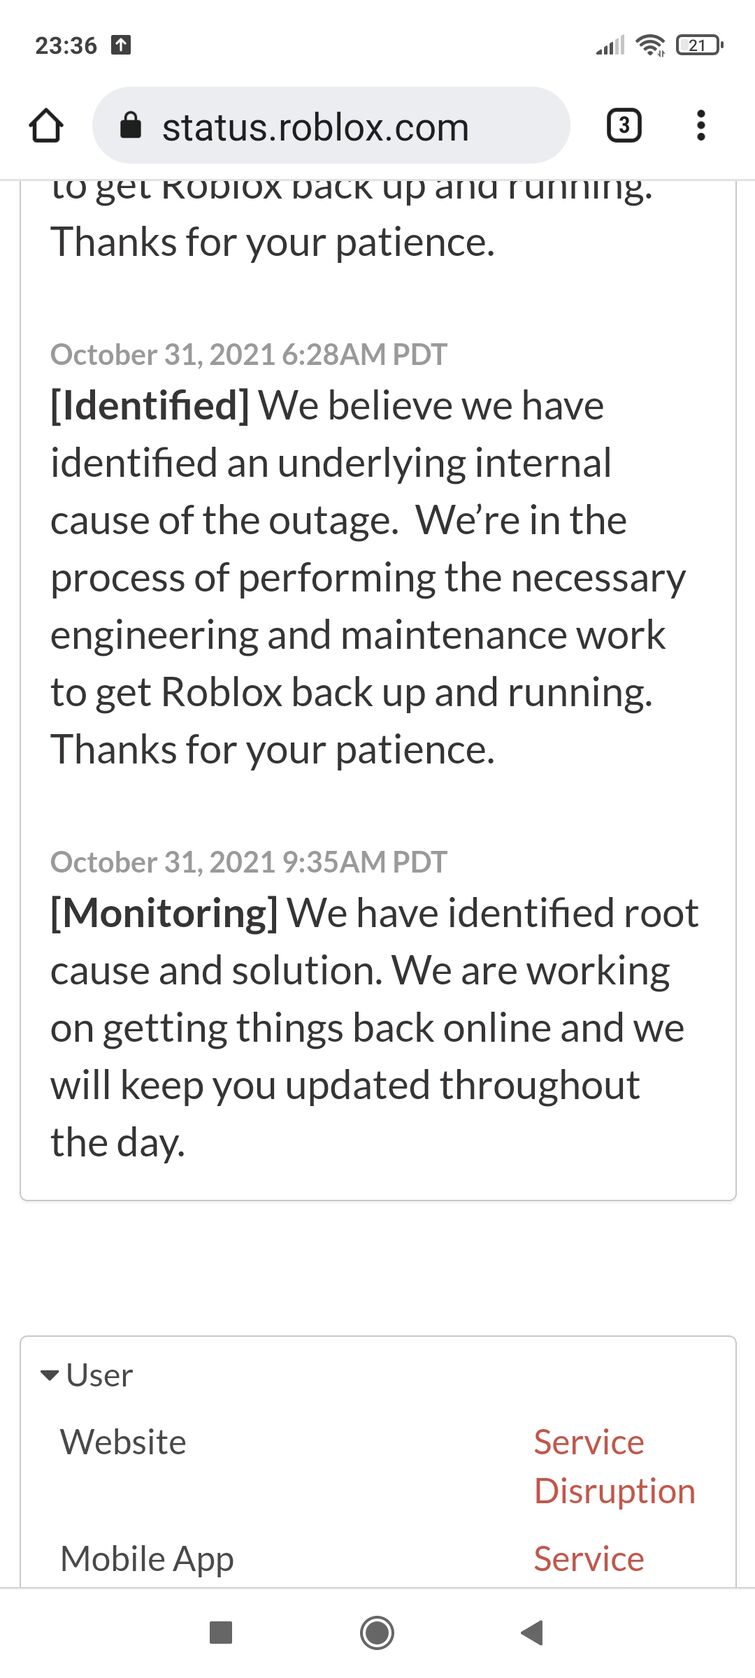 roblox shutting down has ruined a life